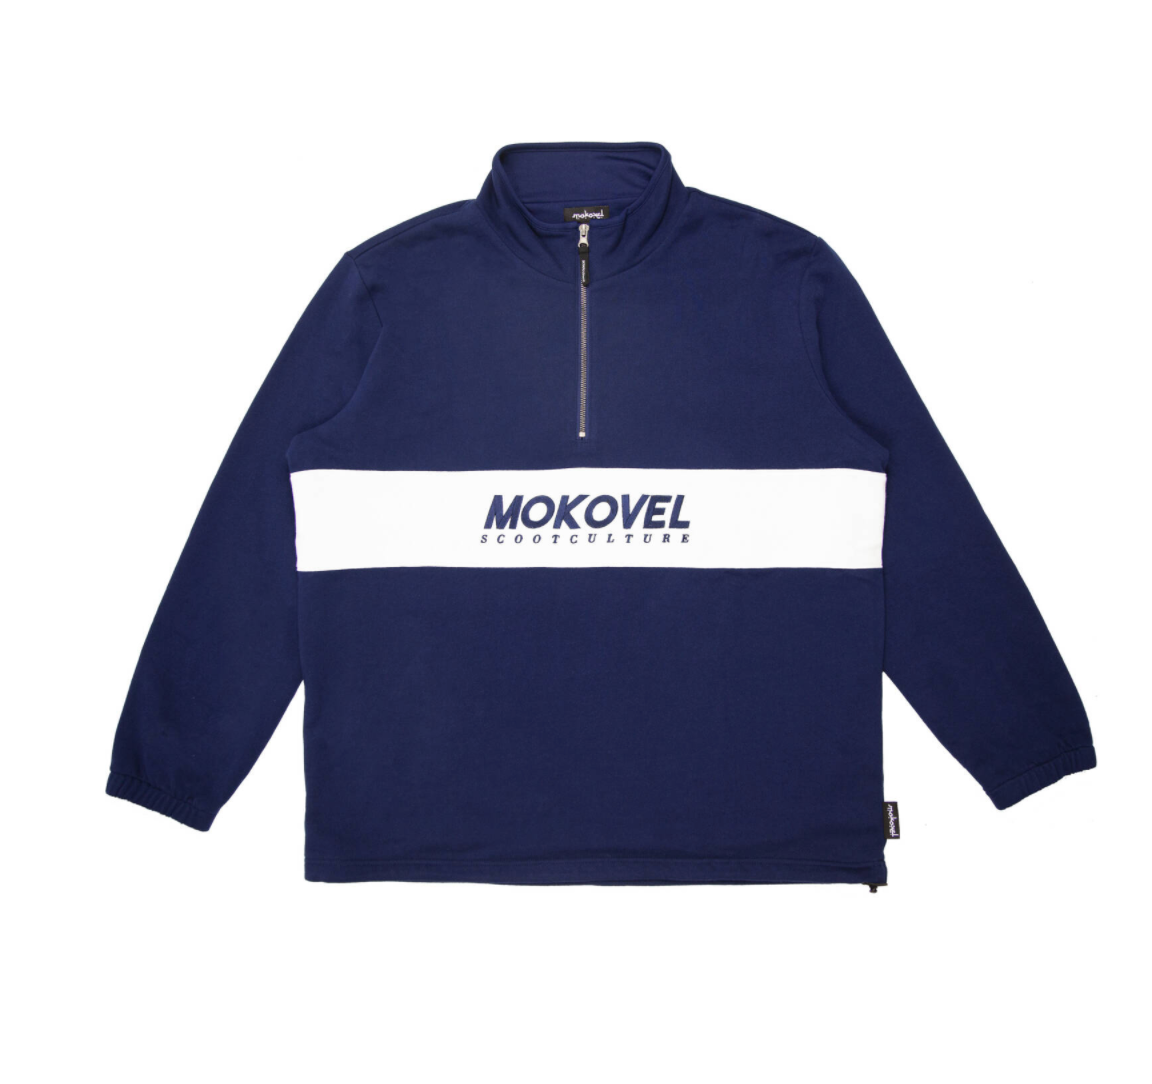 SALG: Mokovel S Scoot Culture Zipper Sweatshirt